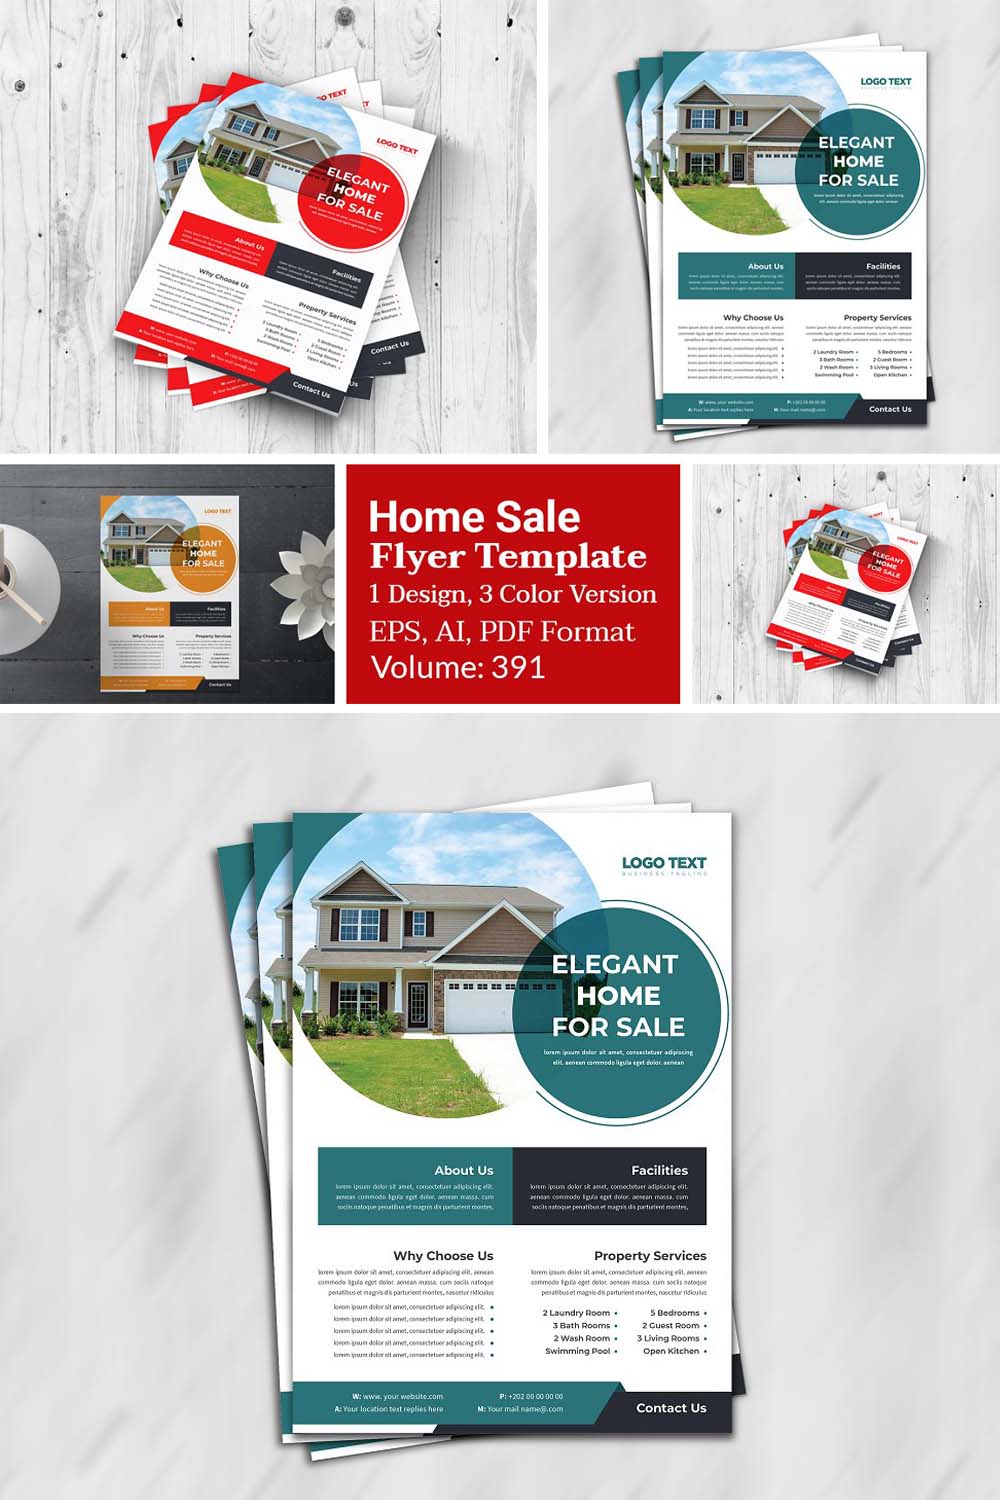 Home Real Estate Flyer Design pinterest preview image.